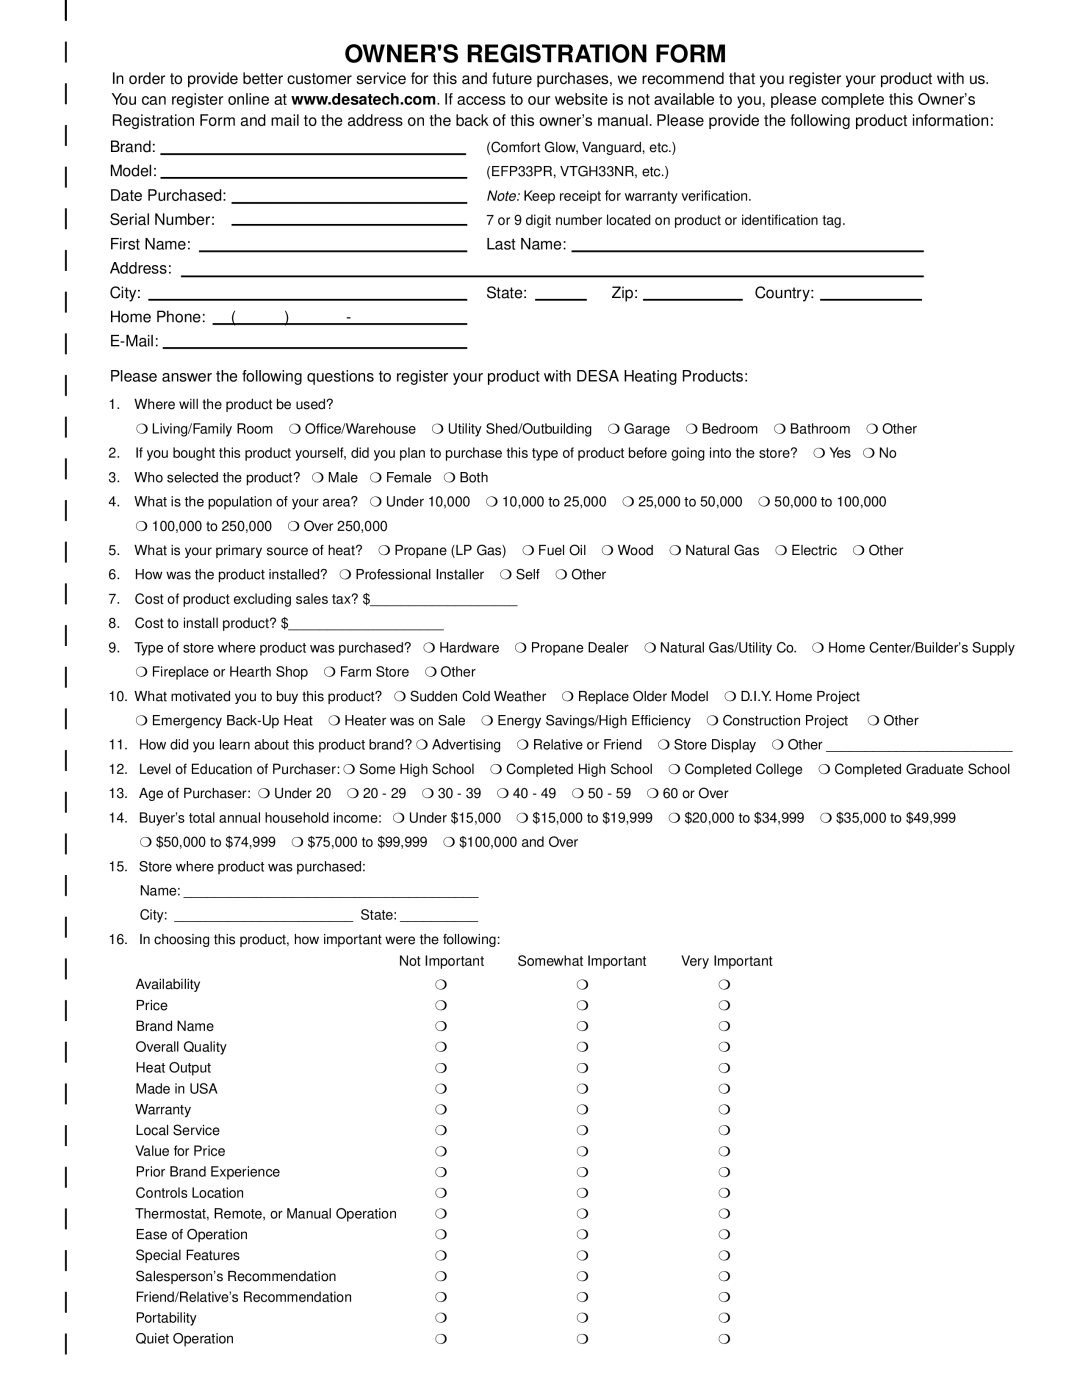 Desa CBN20 installation manual Owners Registration Form 